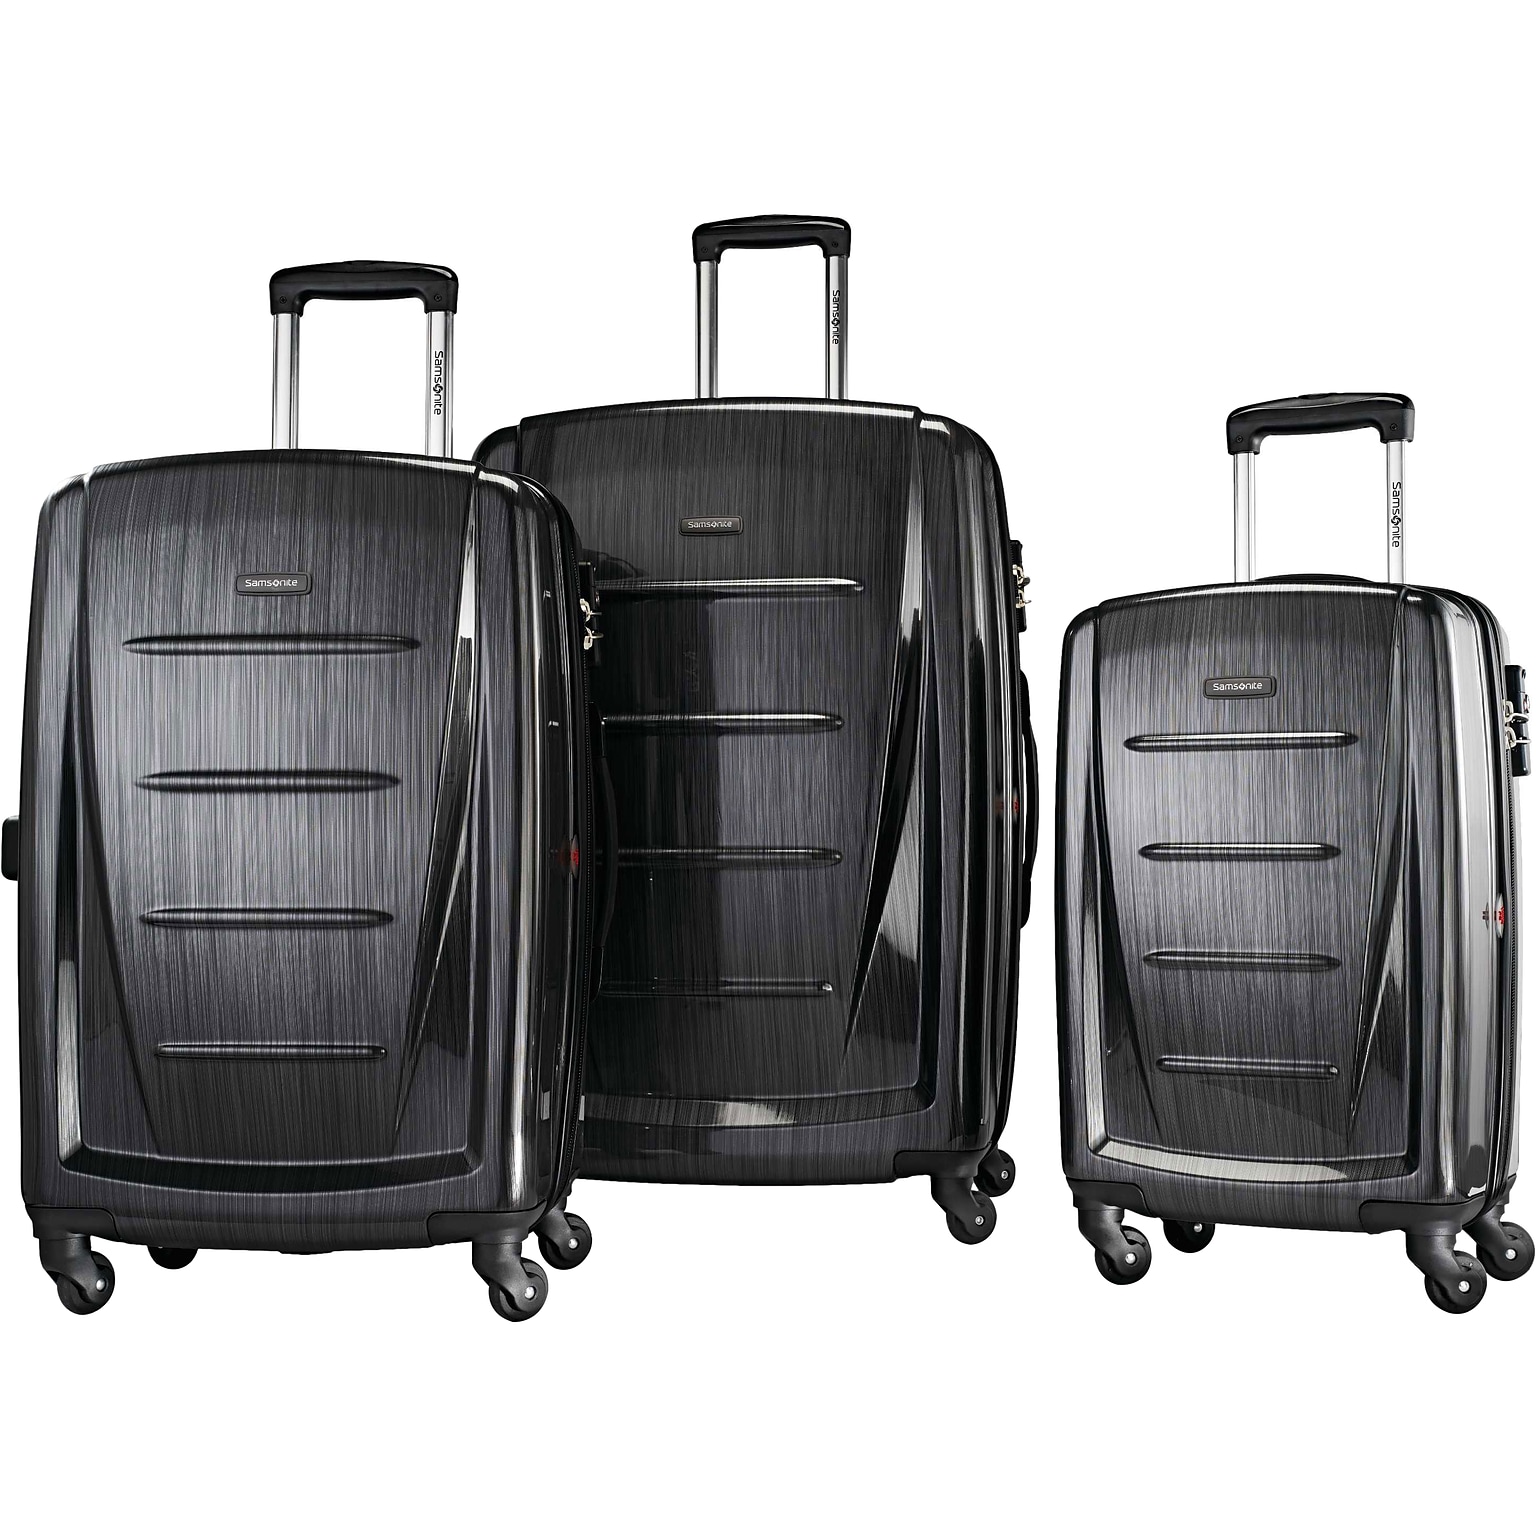 Samsonite Winfield 2 Fashion Polycarbonate 3-Piece Luggage Set, Brushed Anthracite (56847-2849)